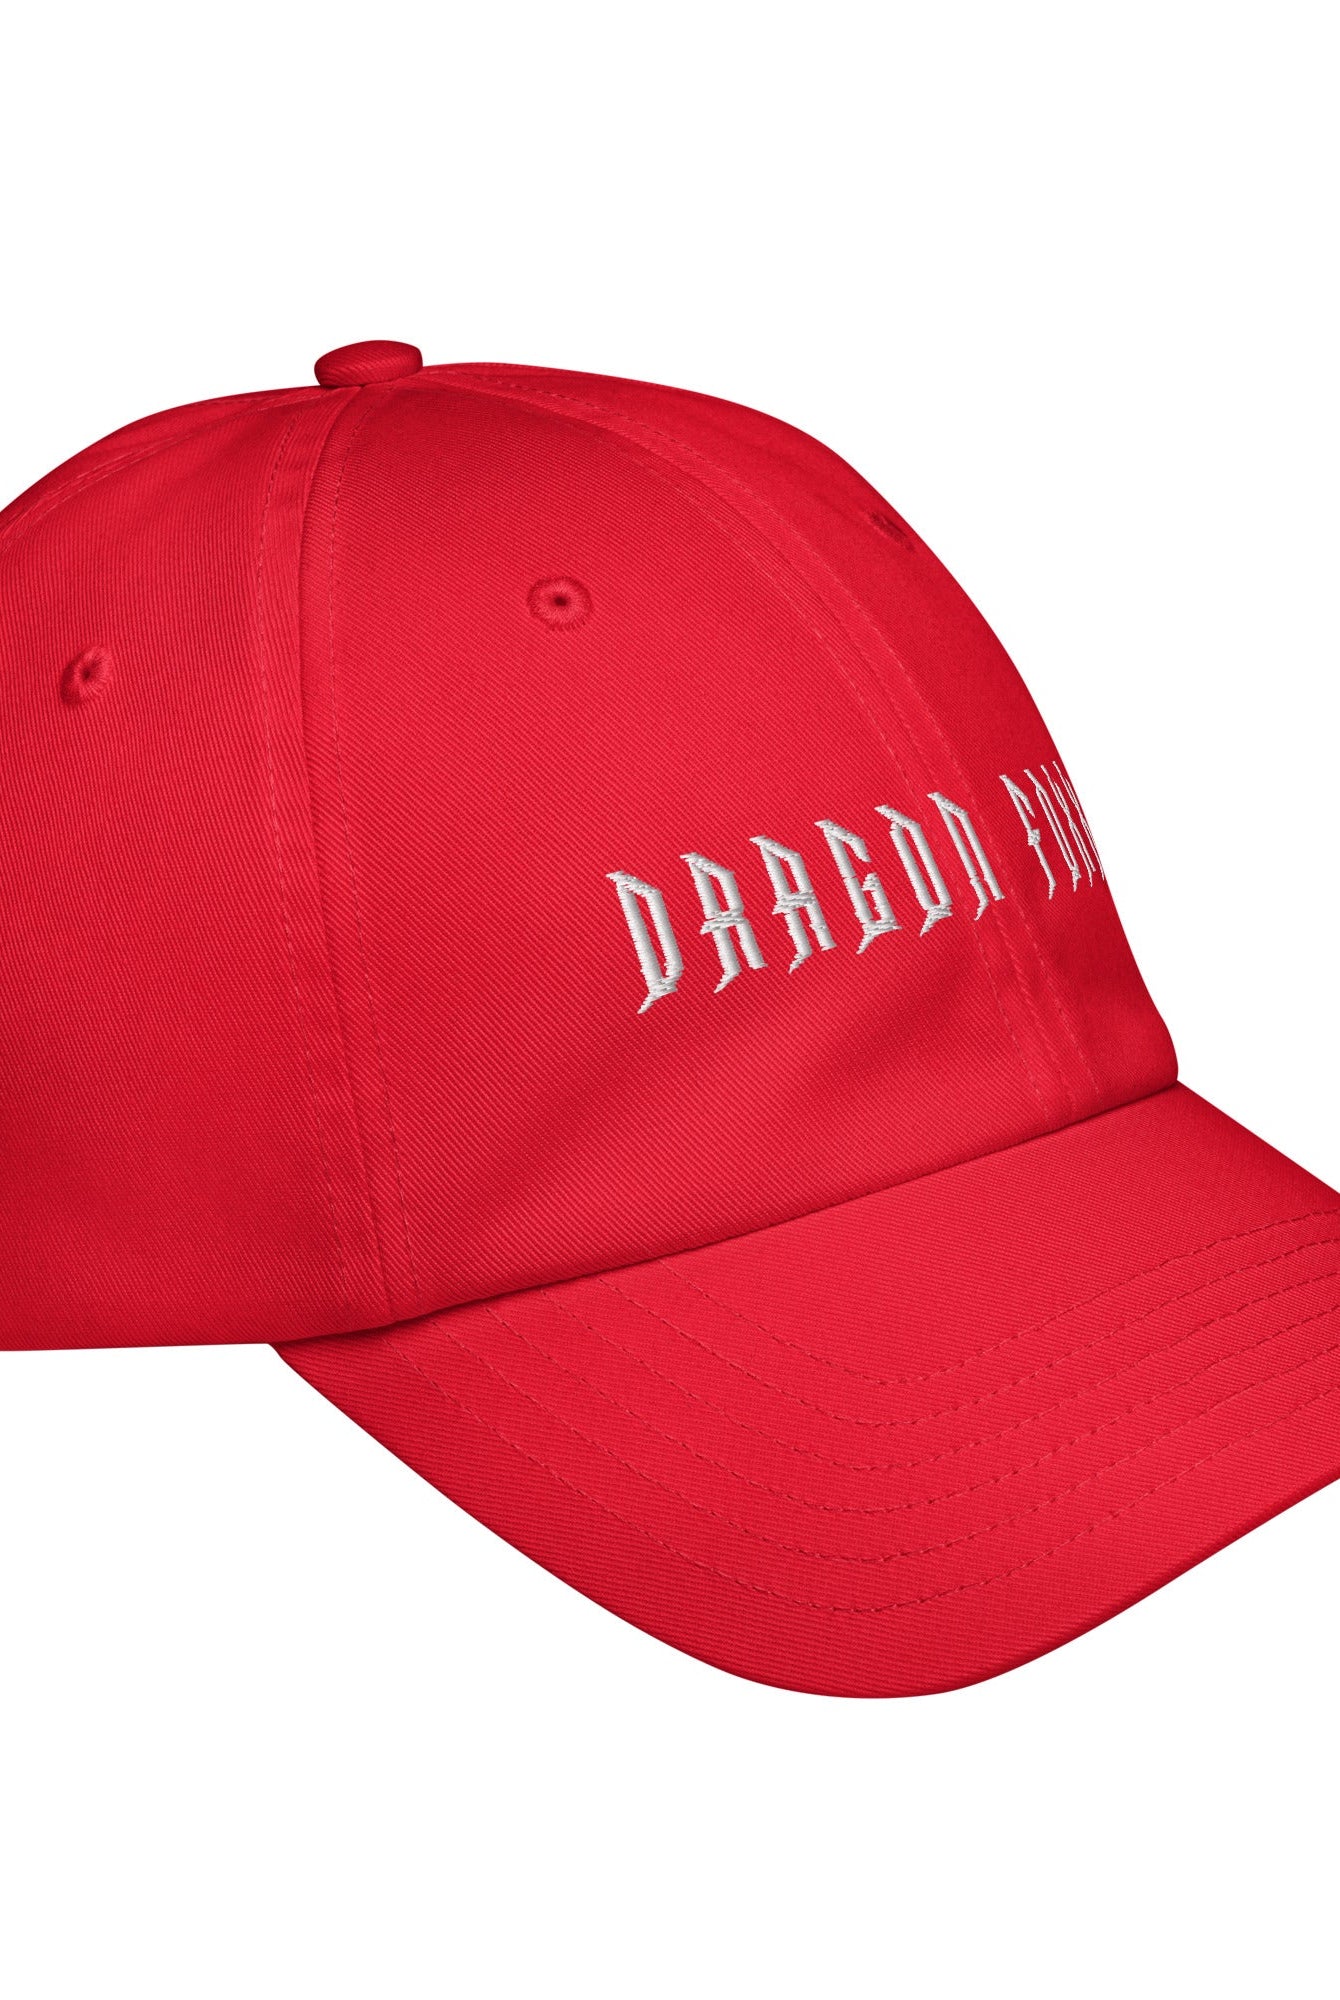 Dragon Foxx® - Under Armour® Dad Hat - Dad Hat - DRAGON FOXX™ - Dragon Foxx® - Under Armour® Dad Hat - 6473955_19345 - Red - Accessories - Black - Dad Hats